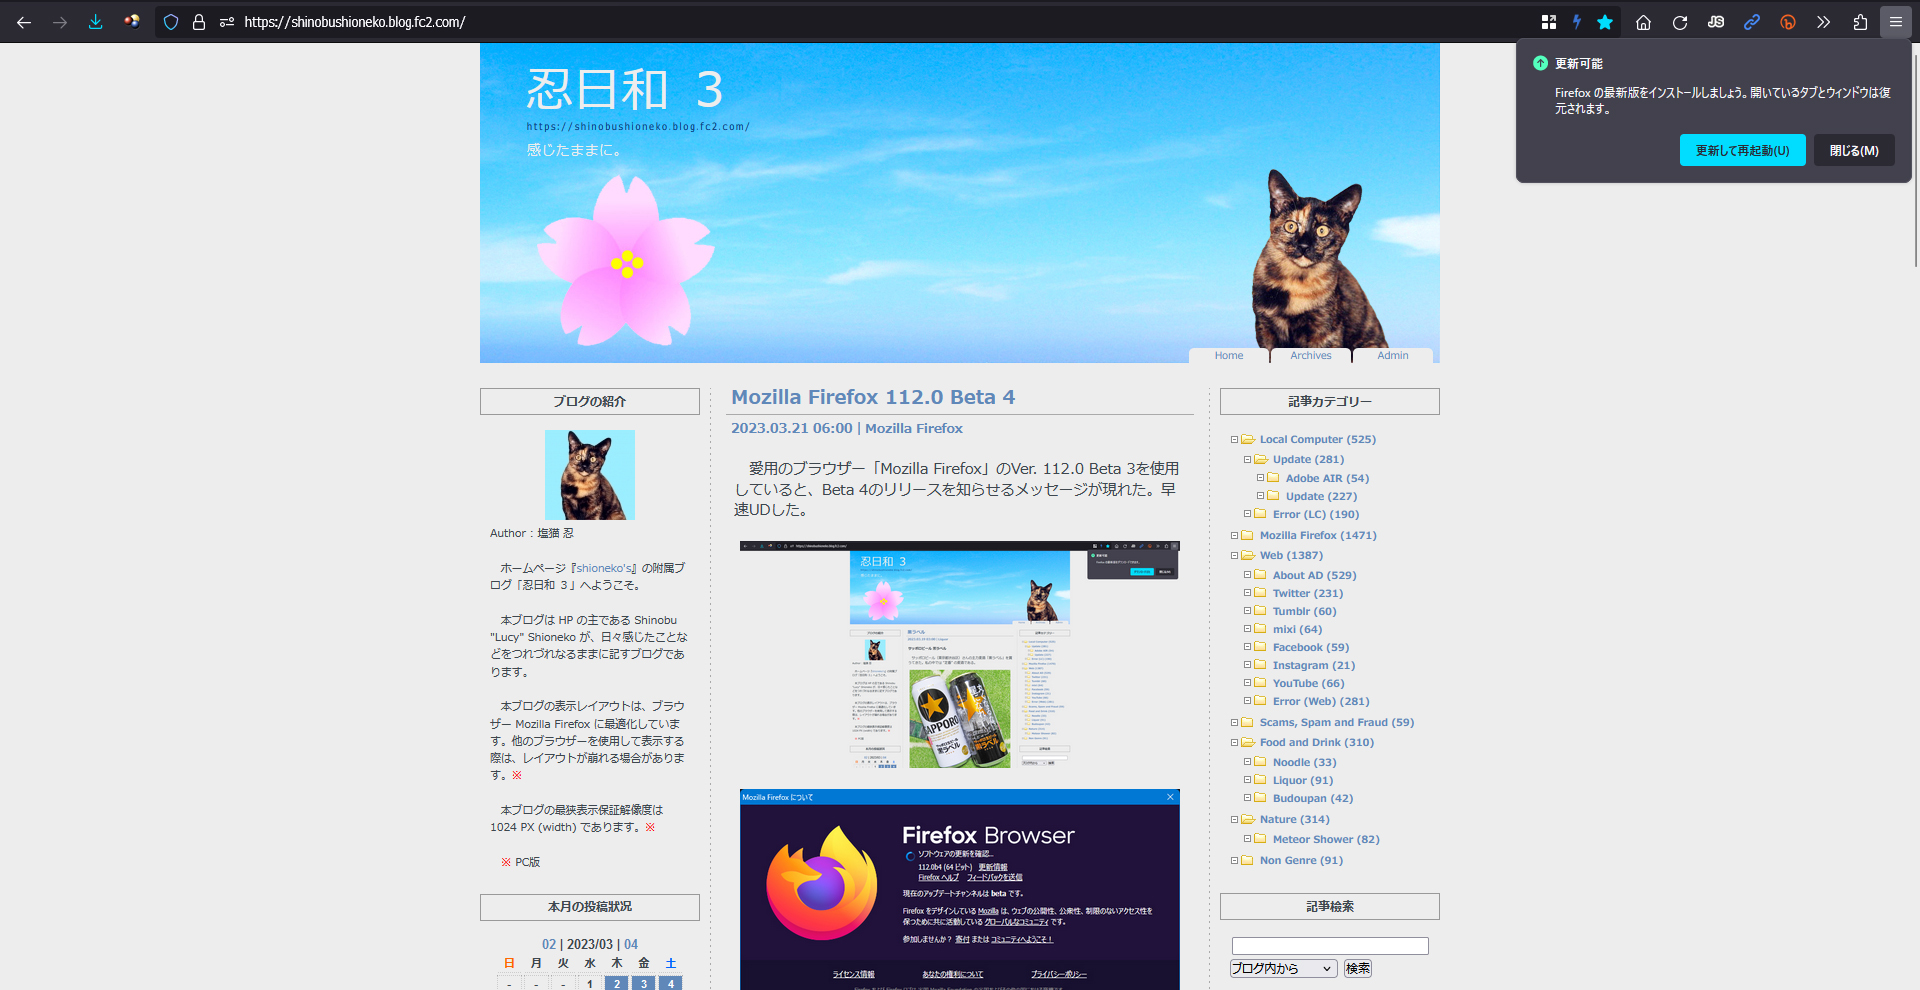 Mozilla Firefox 112.0 Beta 5